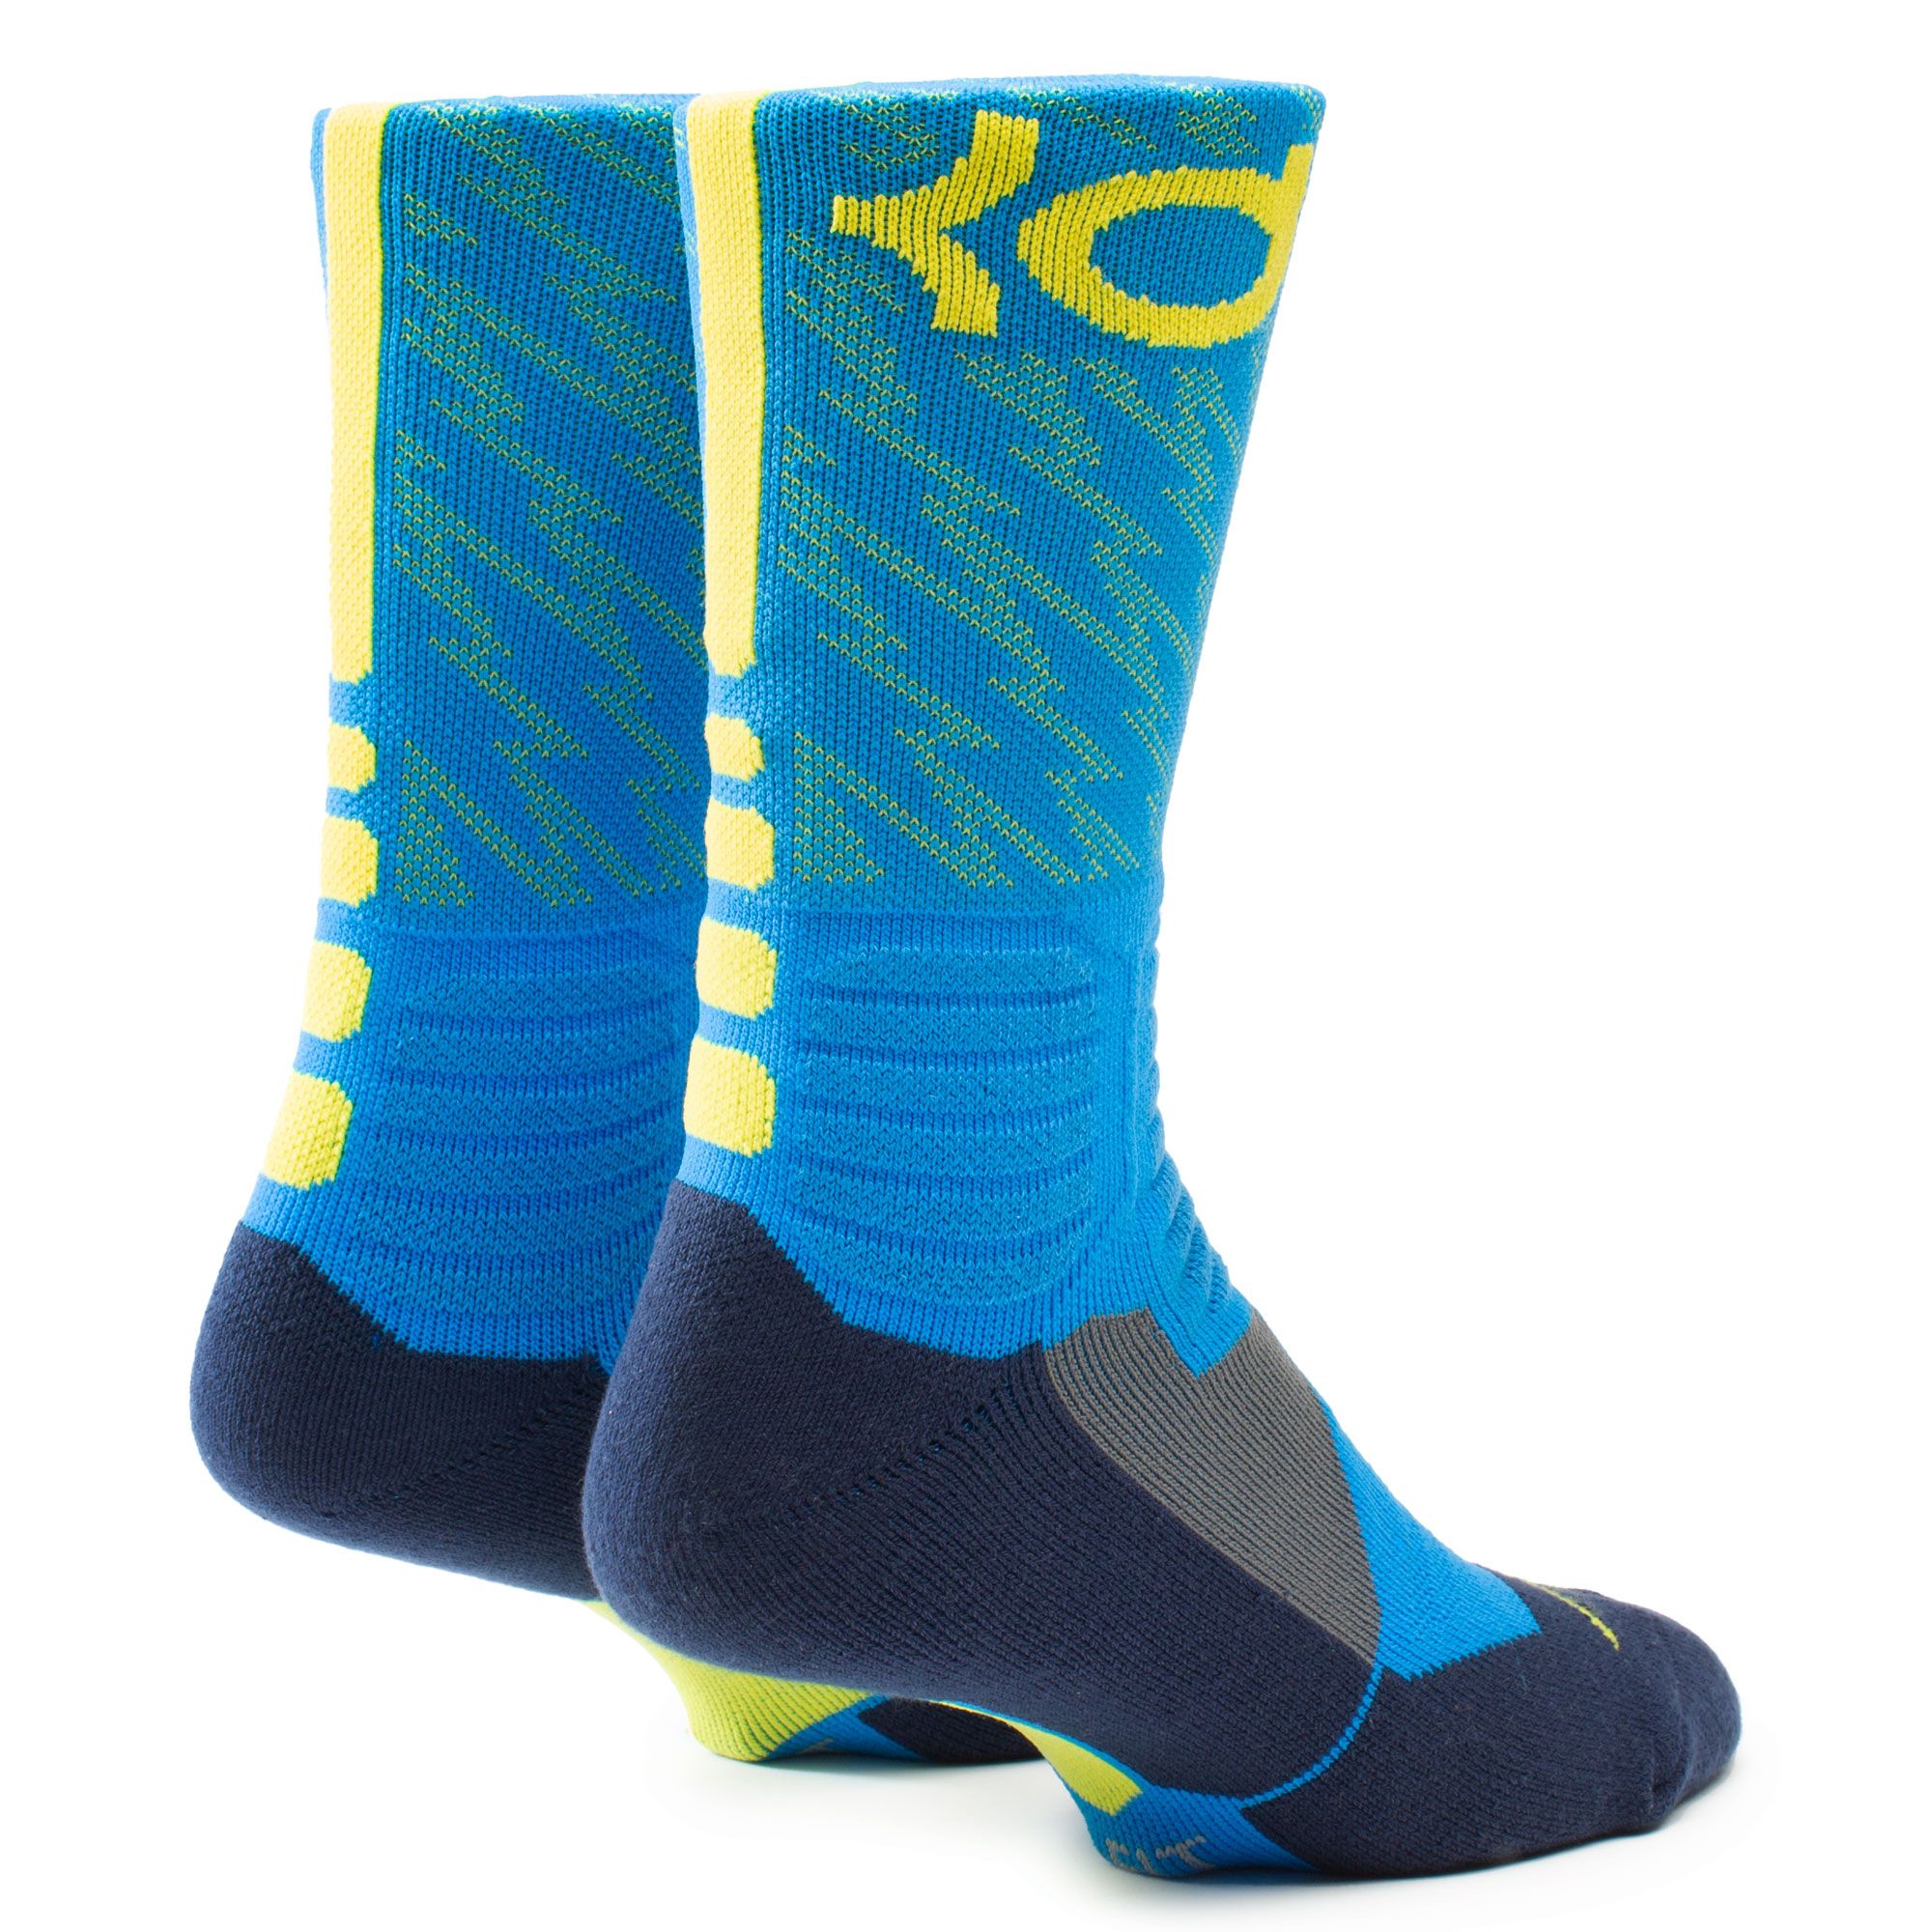 Nike Elite KD Versatility Crew Basketball Socks, Blue Black Orange MED  5375-406 